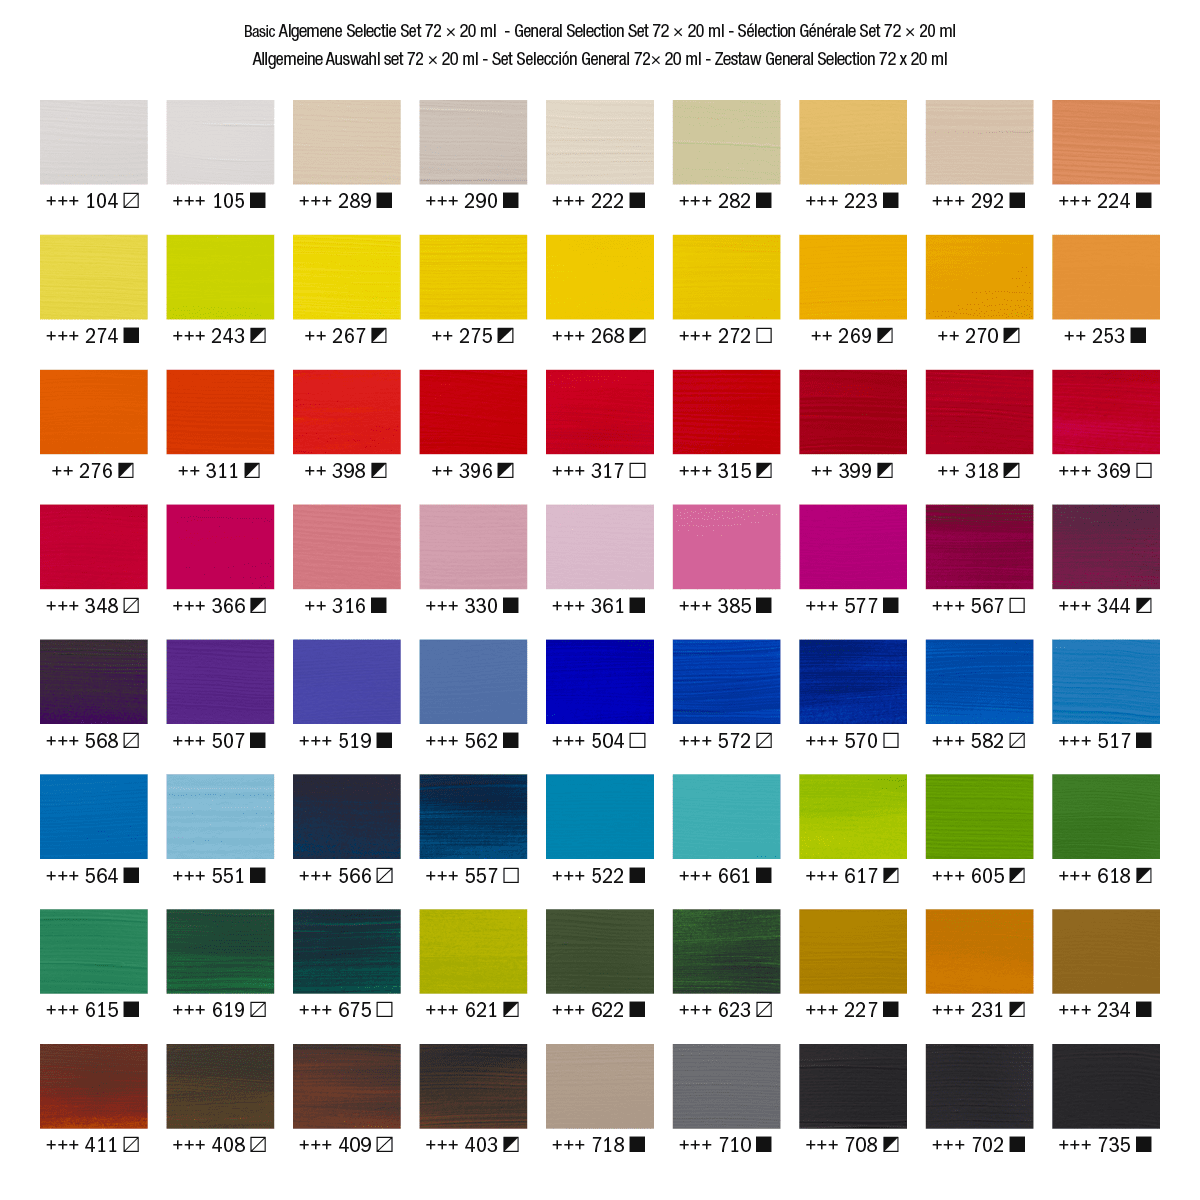 Amsterdam Acrylic Paint Set of 12 Colors, 20ml Tubes – ARCH Art